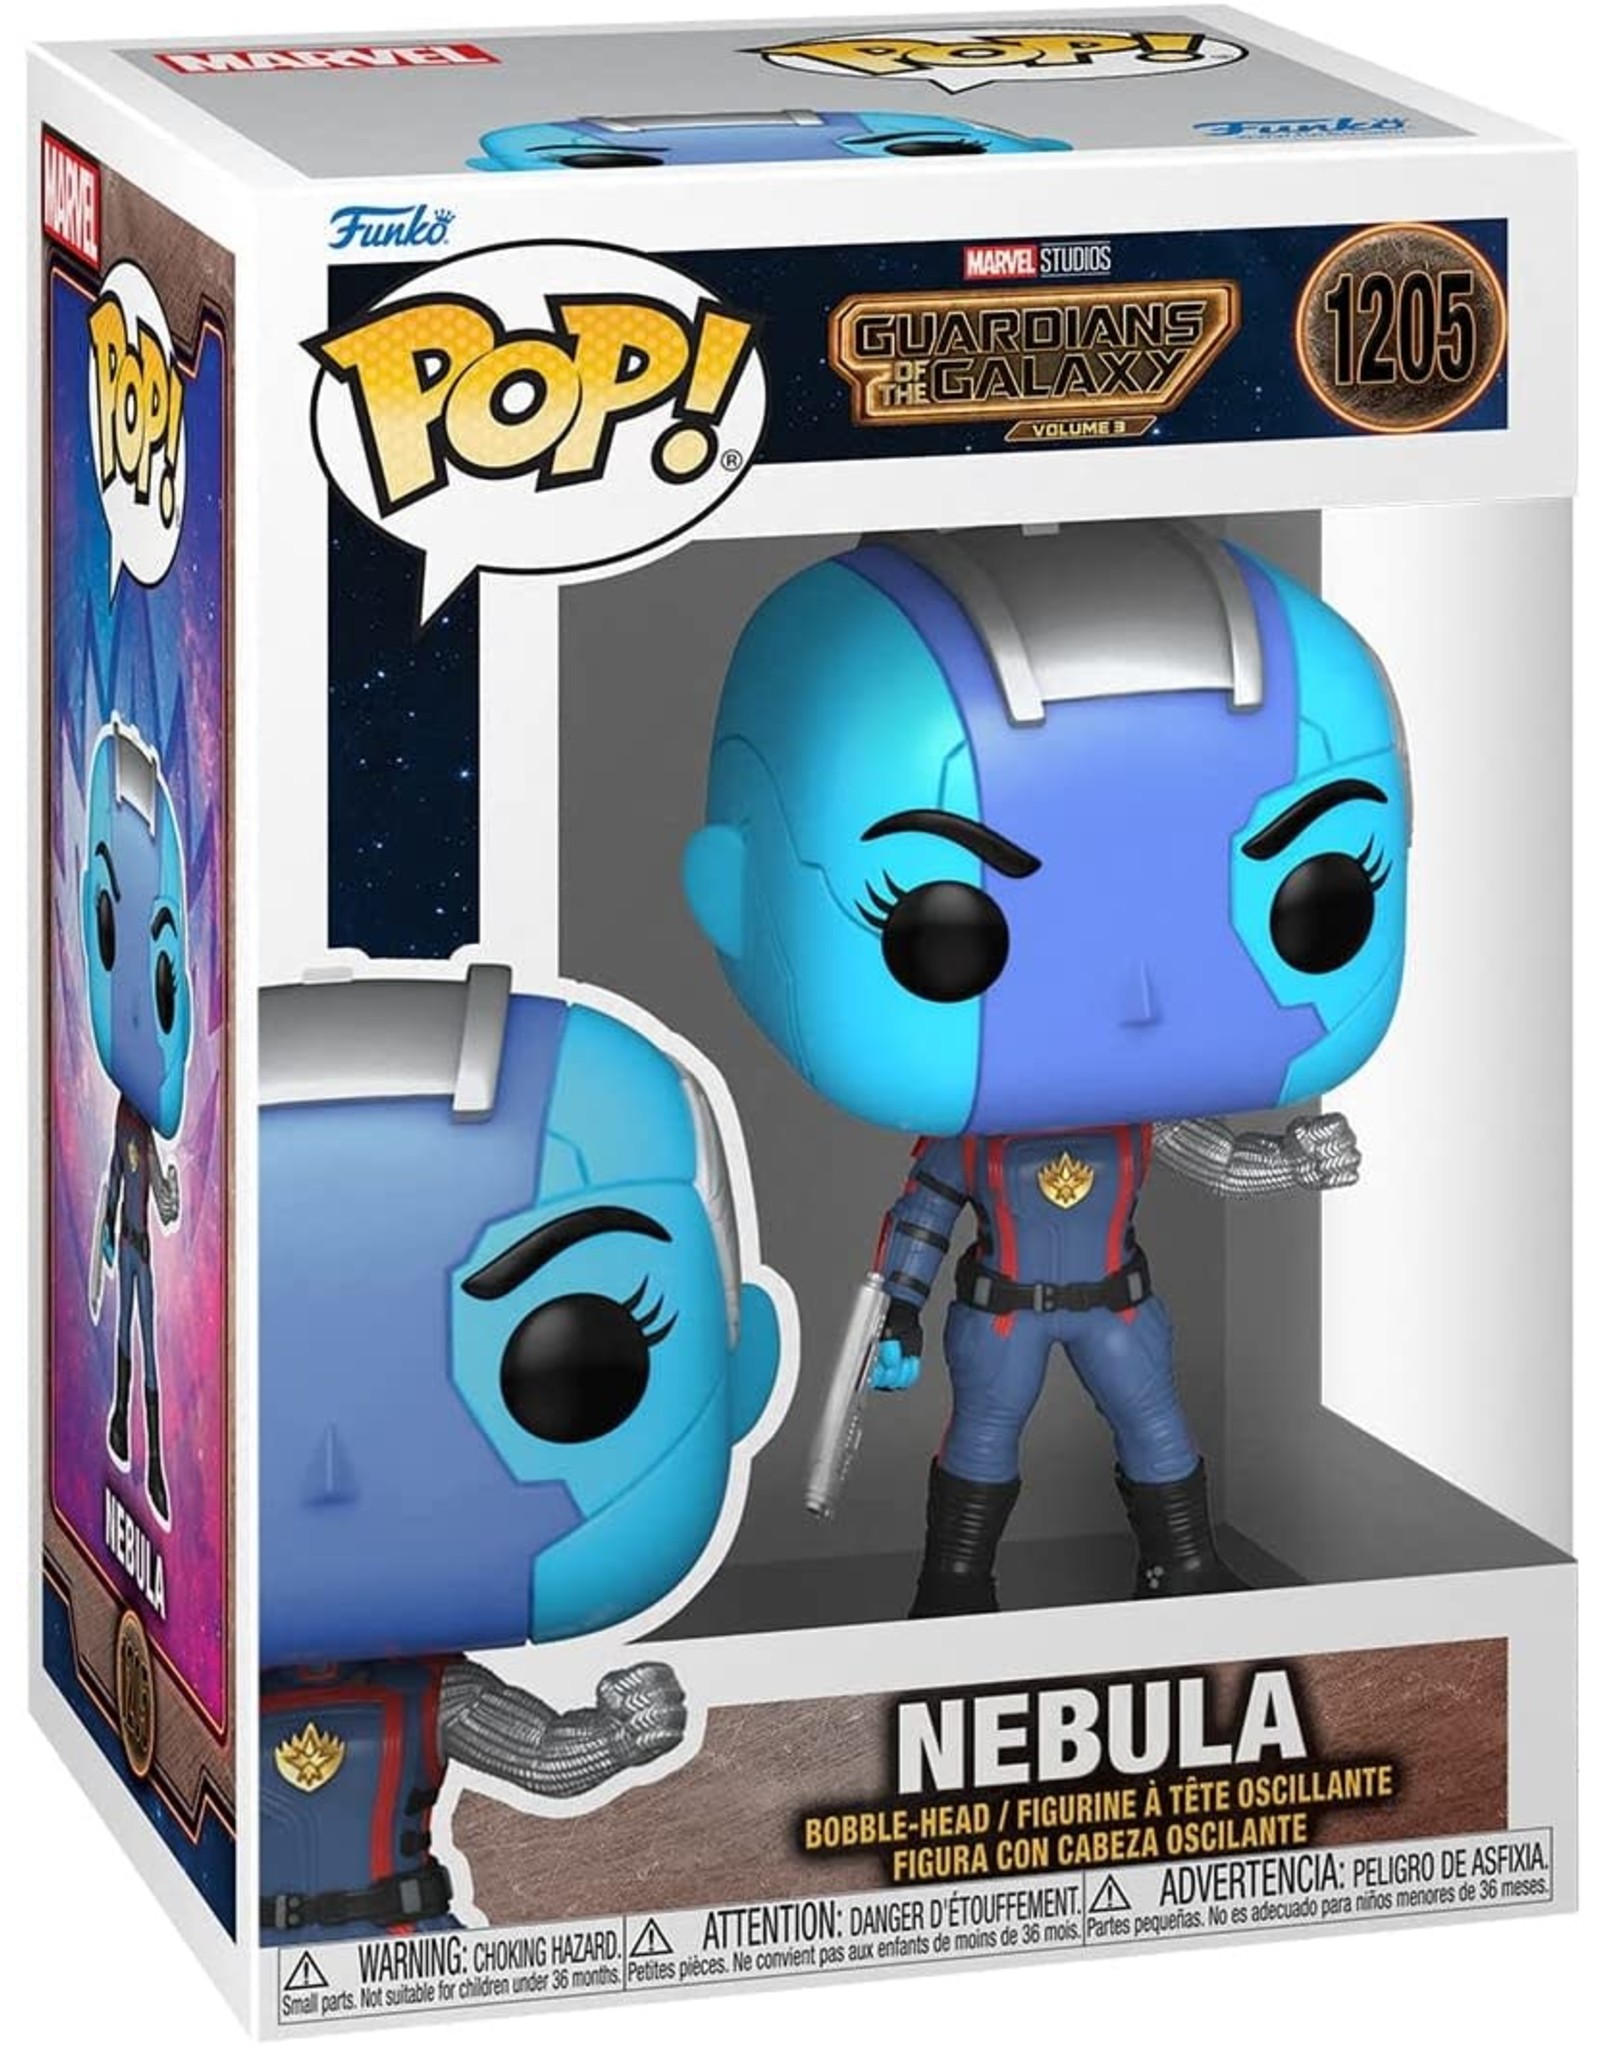 FUNKO Funko Pop!: Guardians of the Galaxy Volume 3 - Nebula